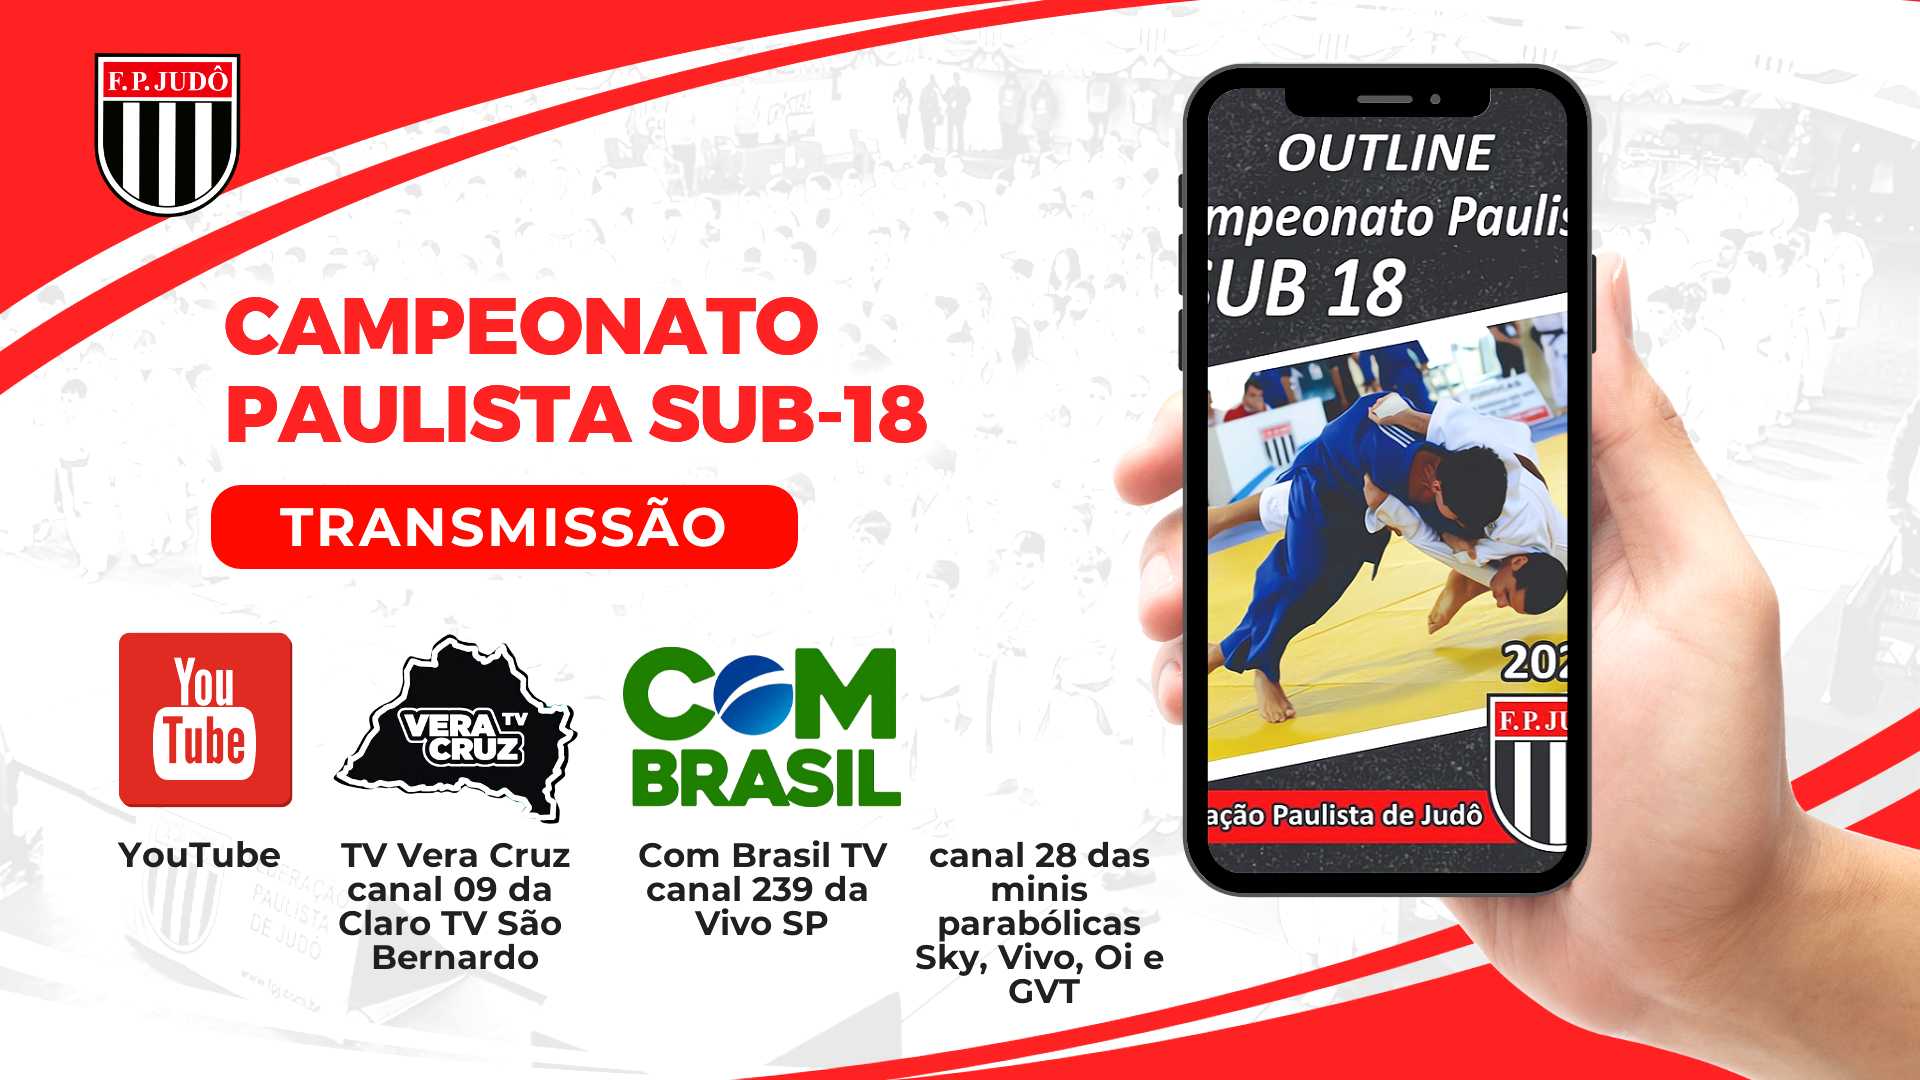 [Transmissão] Campeonato Paulista Sub-18